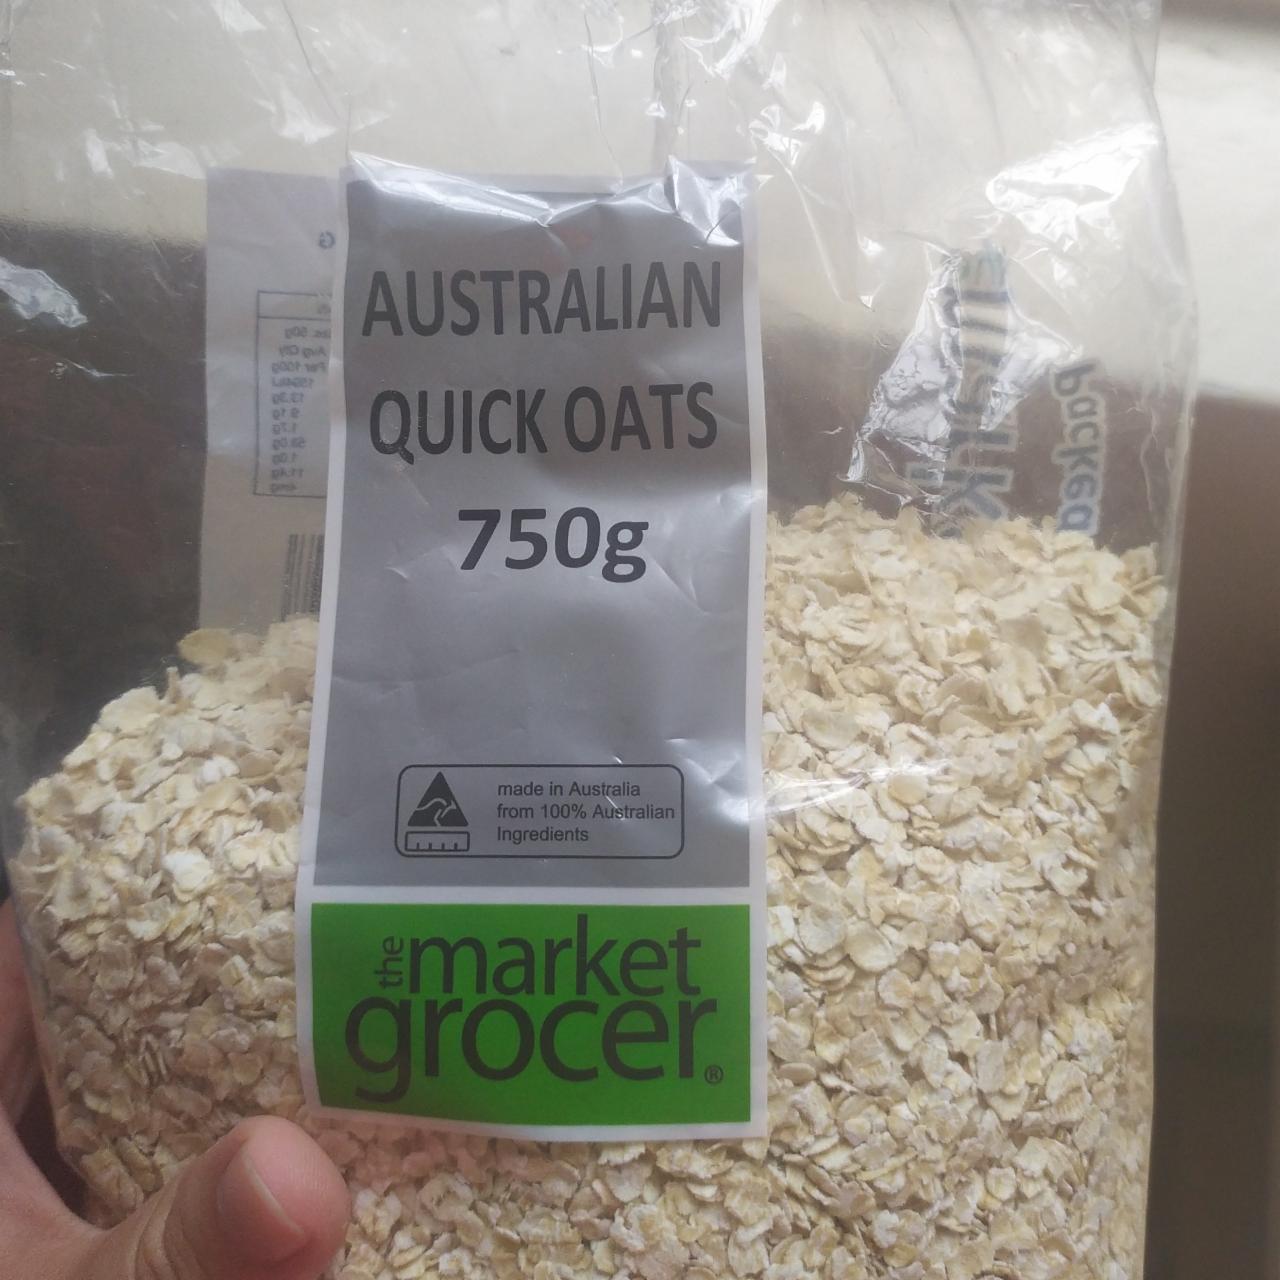 Fotografie - Australian quick oats The market grocer